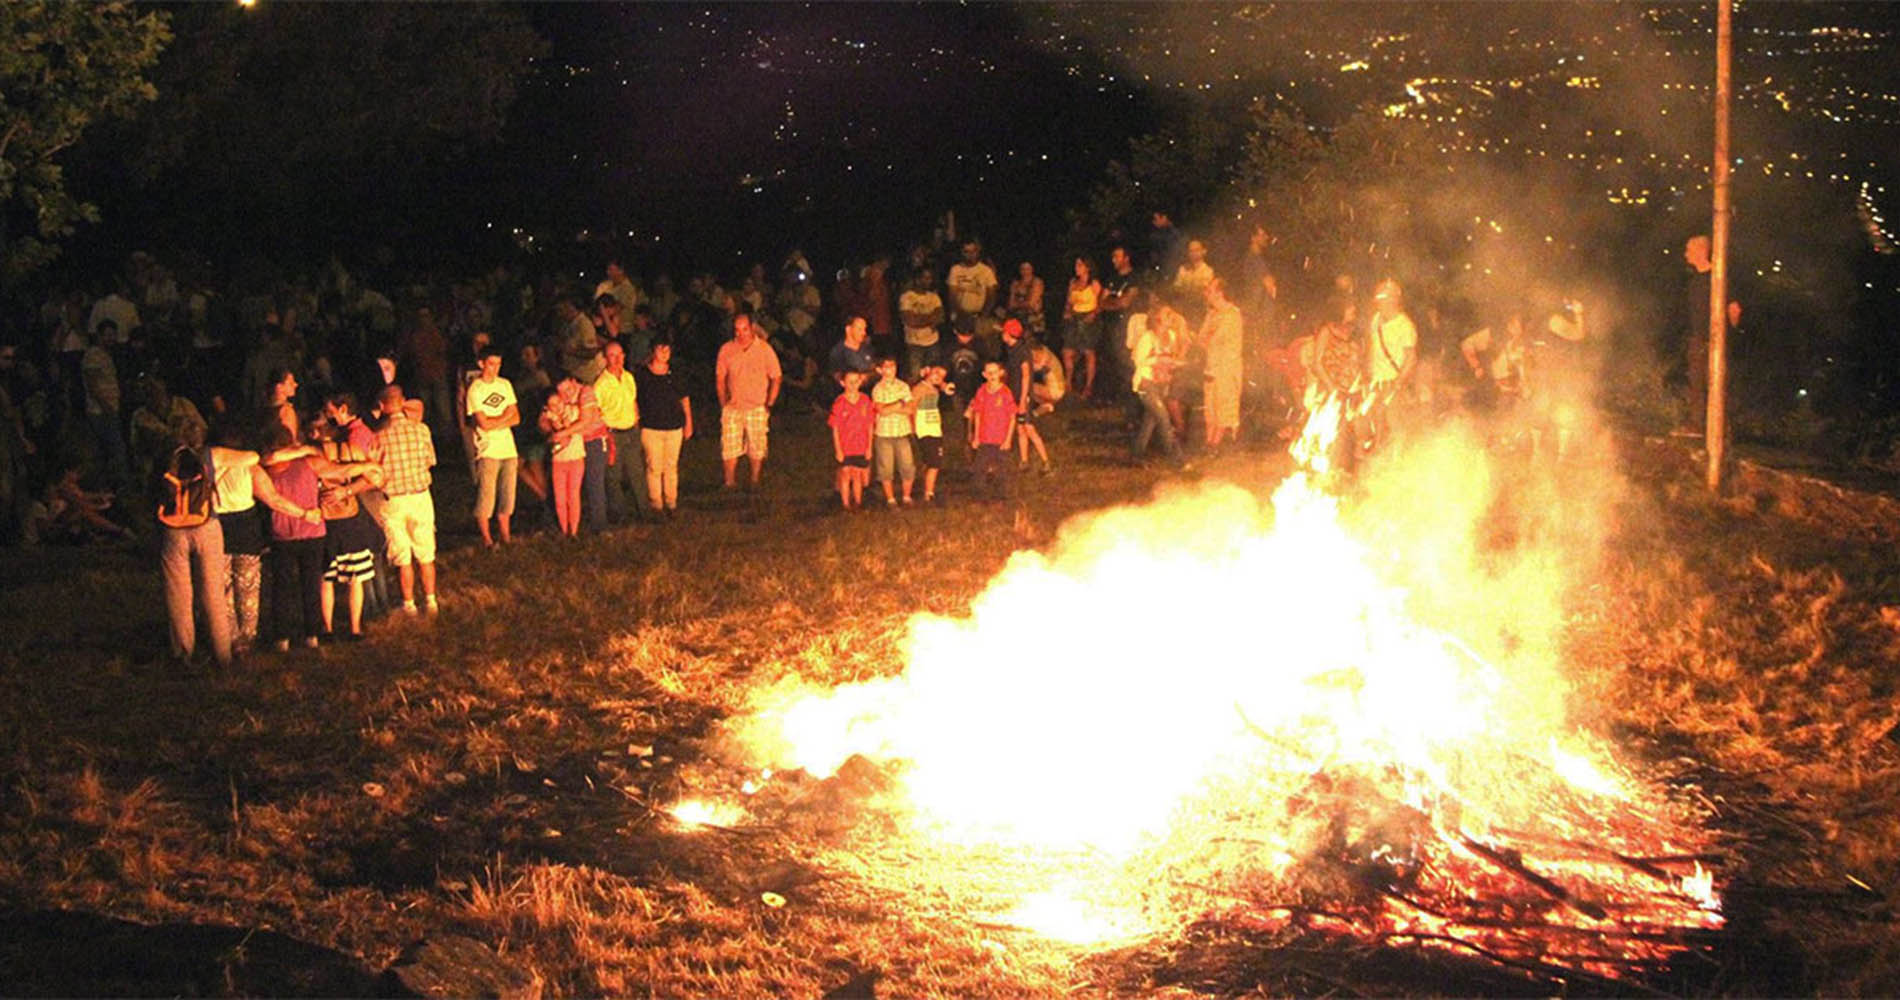 redondela pontevedra rias baixas turismo tourism festa fachos antorchas Torchlight Festival